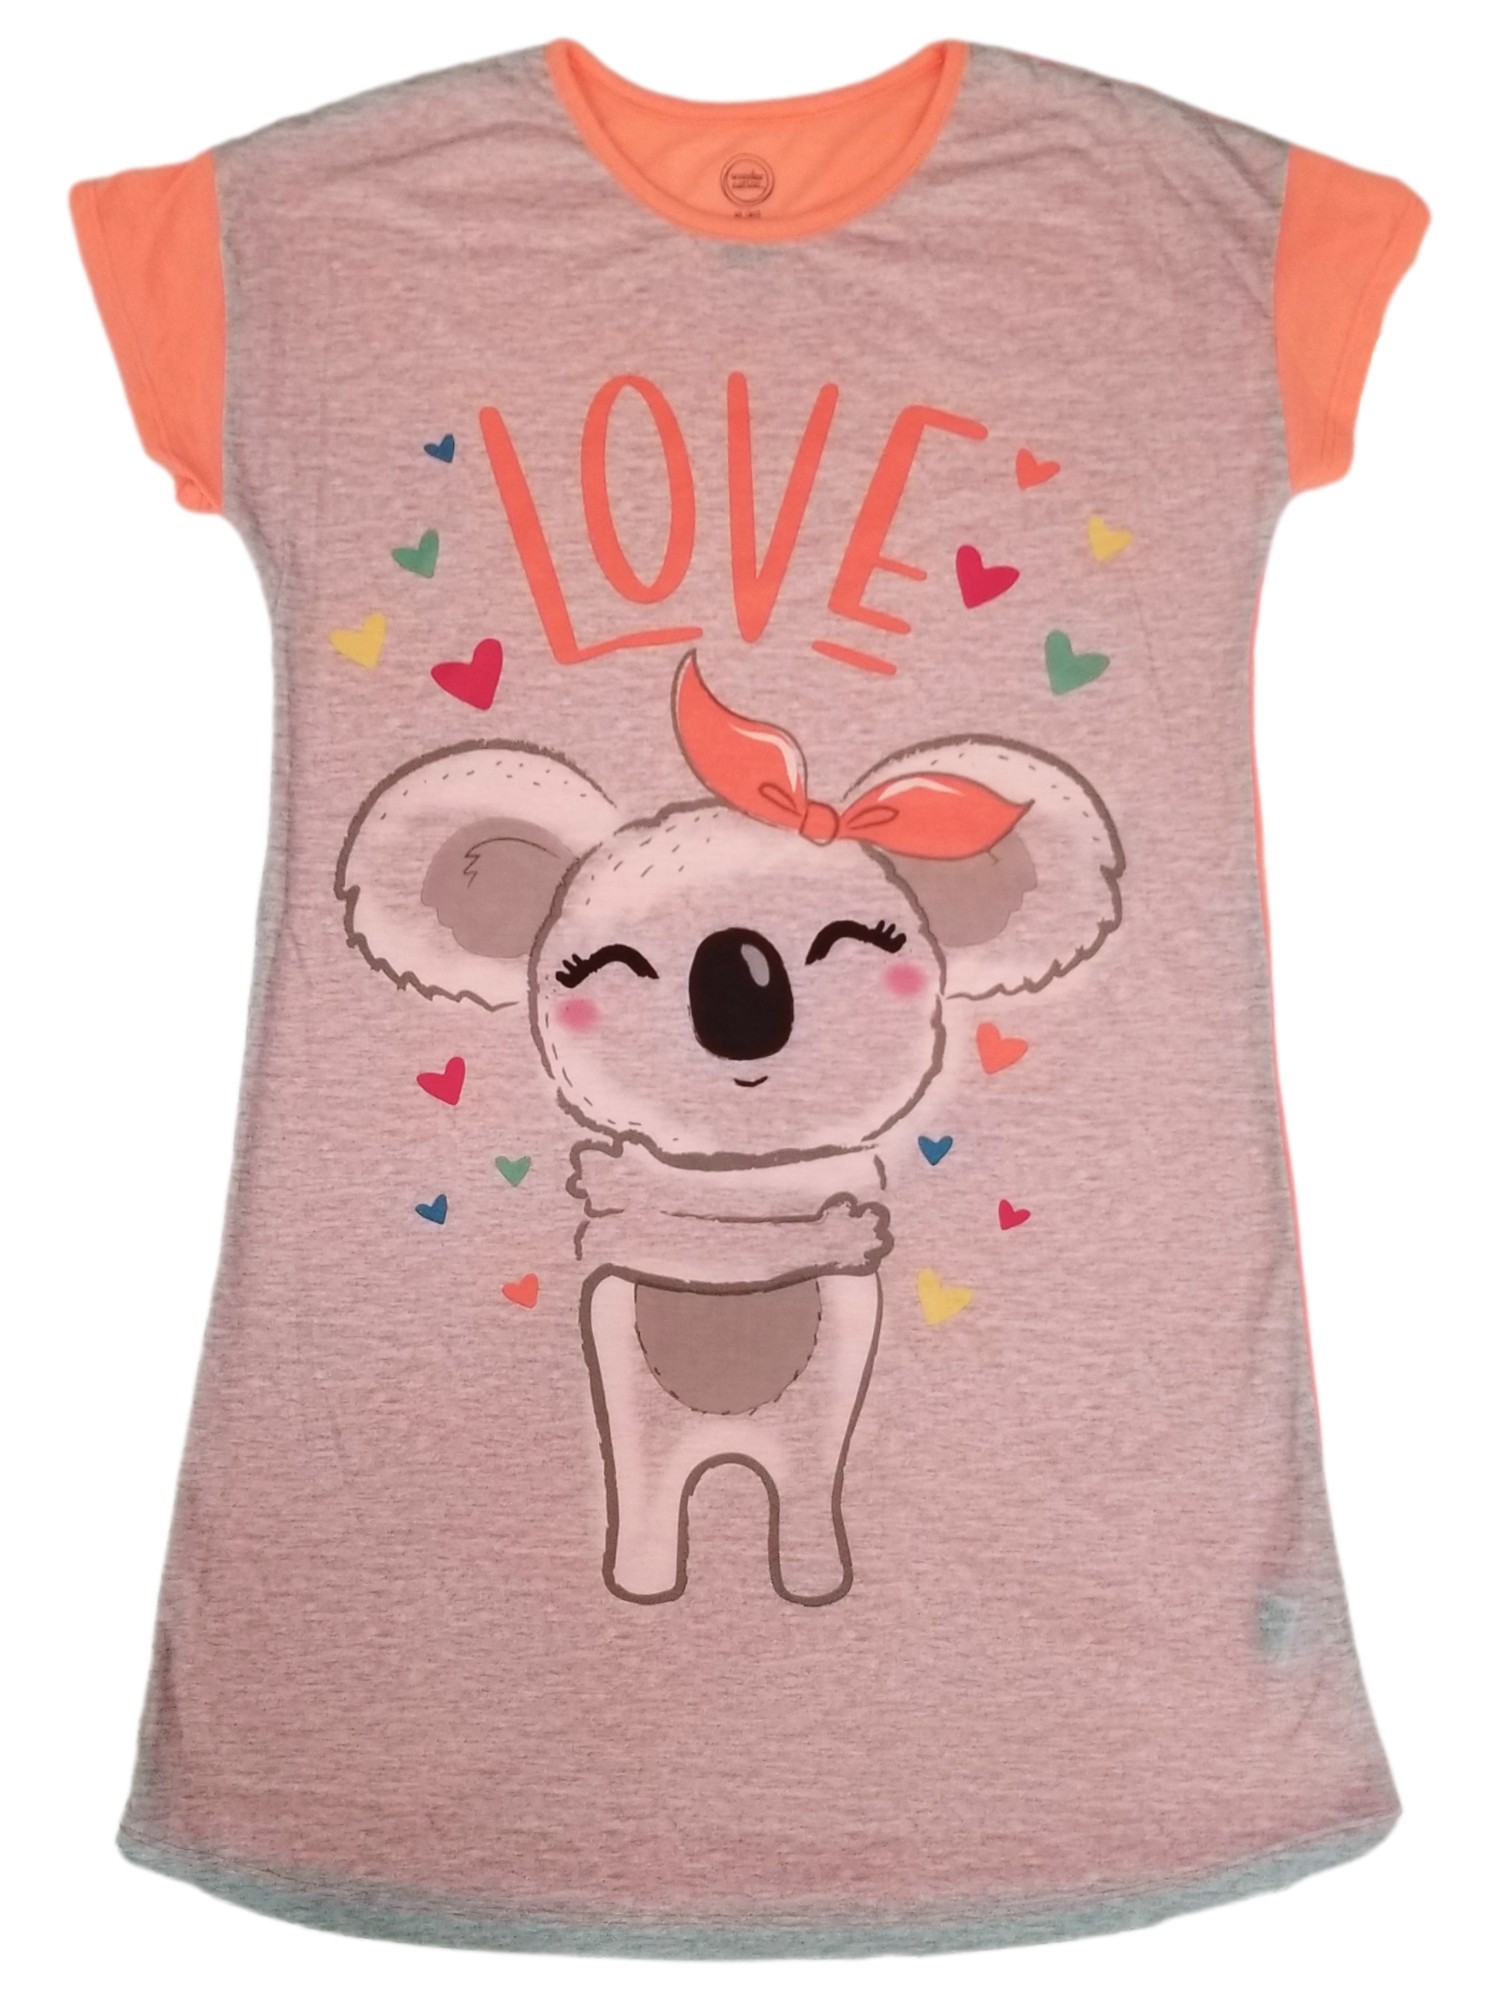 Wonder Nation Girls Neon Orange & Gray Koala Love Hearts Pajamas Sleep Shirt Nightgown